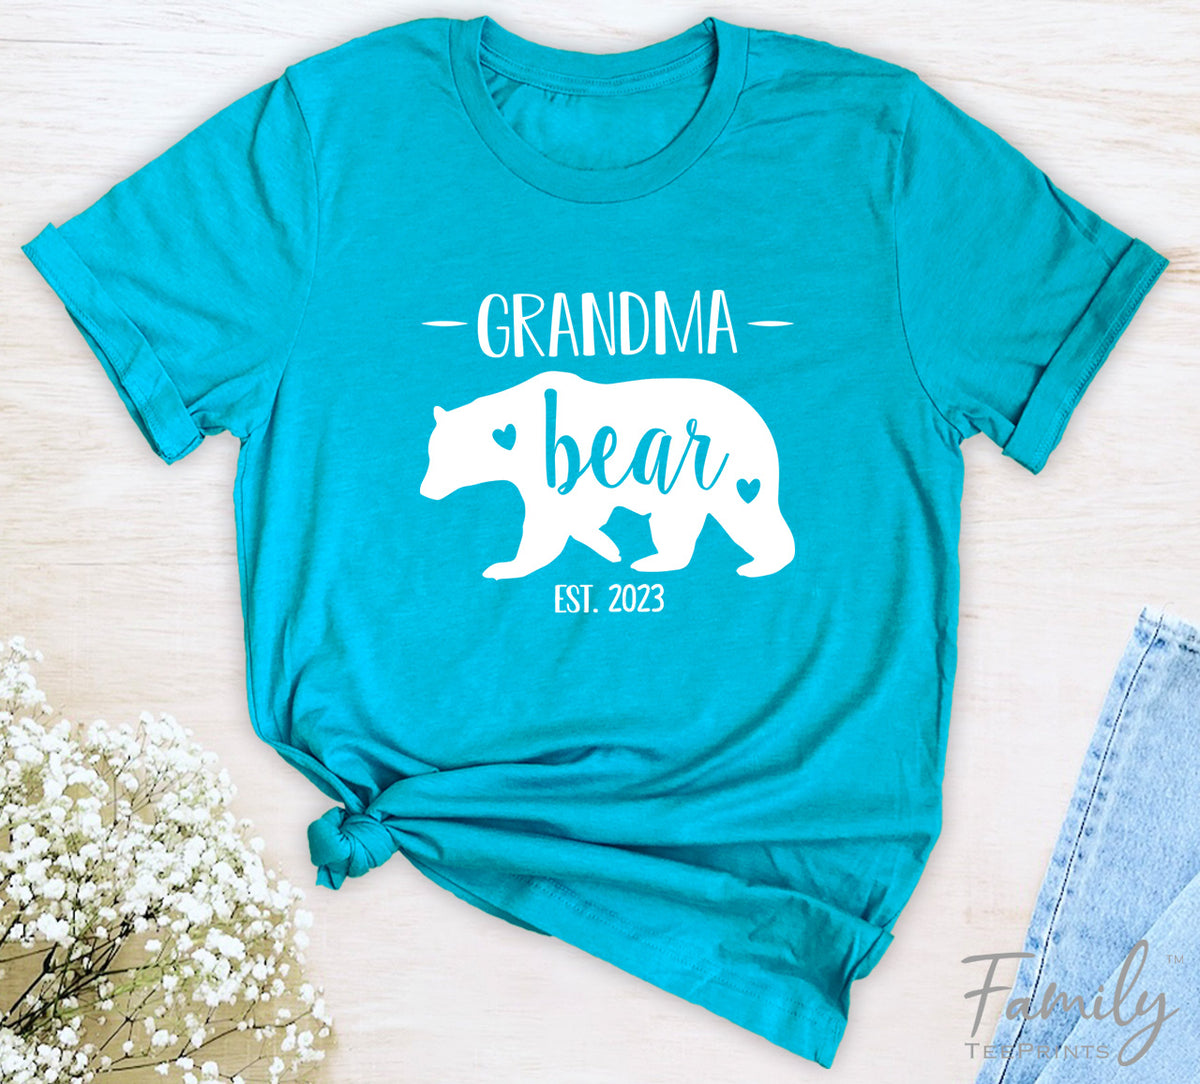 Grandma Bear Est. 2023 - Unisex T-shirt - Grandma Shirt - Gift For New Grandma - familyteeprints